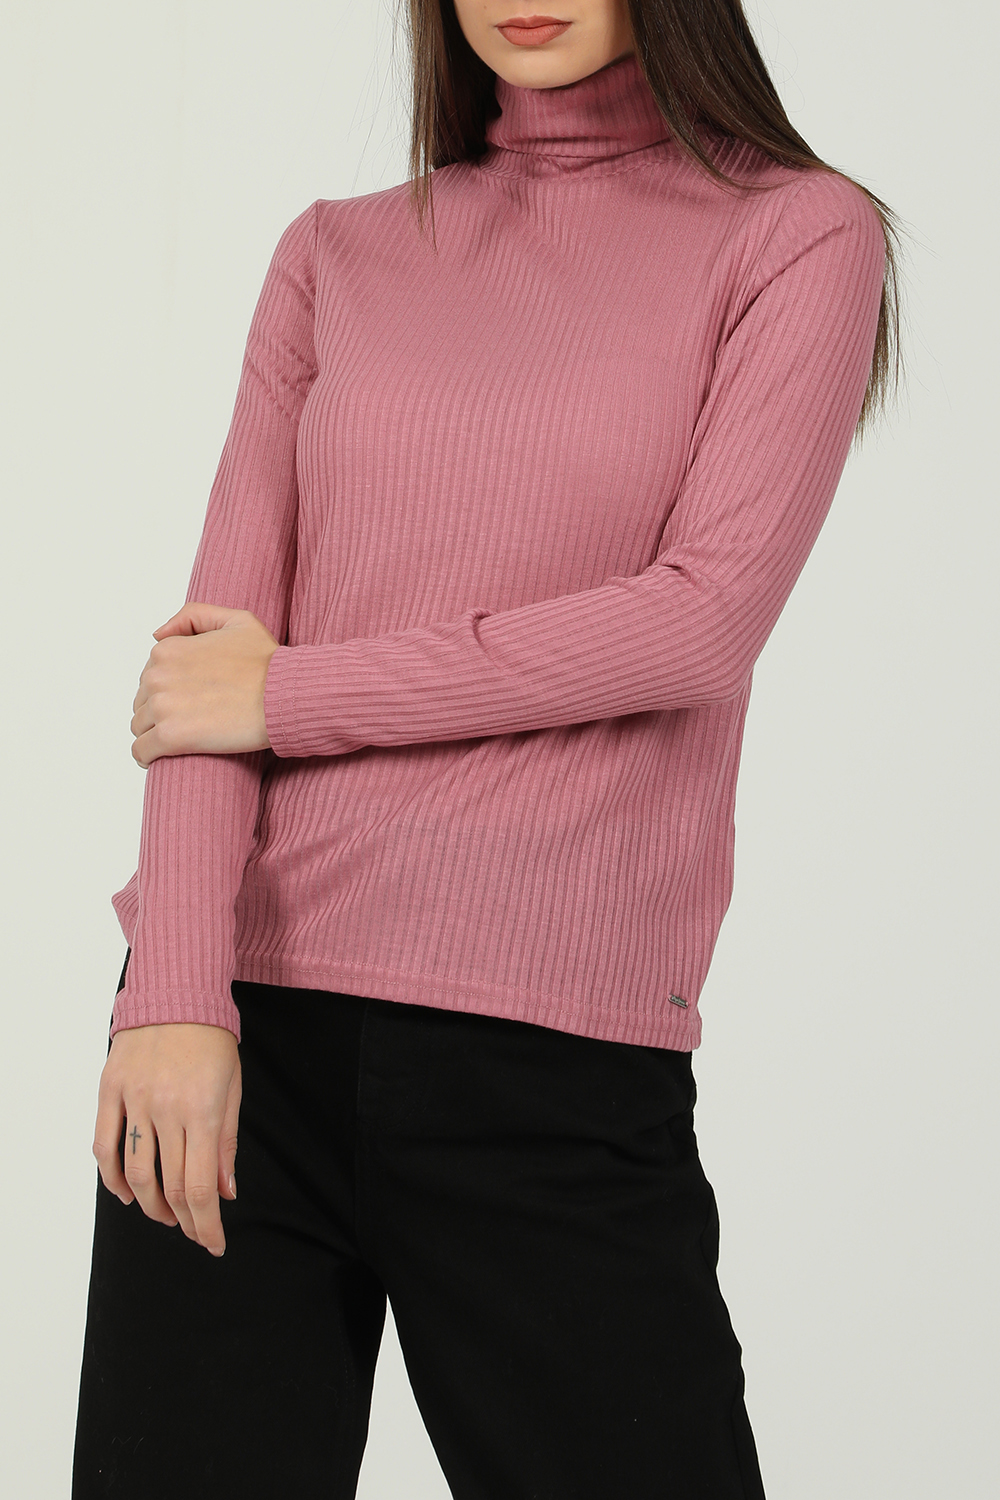 PEPE JEANS – Γυναικεία μακρυμάνικη μπλούζα PEPE JEANS DEBORAH ροζ 1822899.0-004H